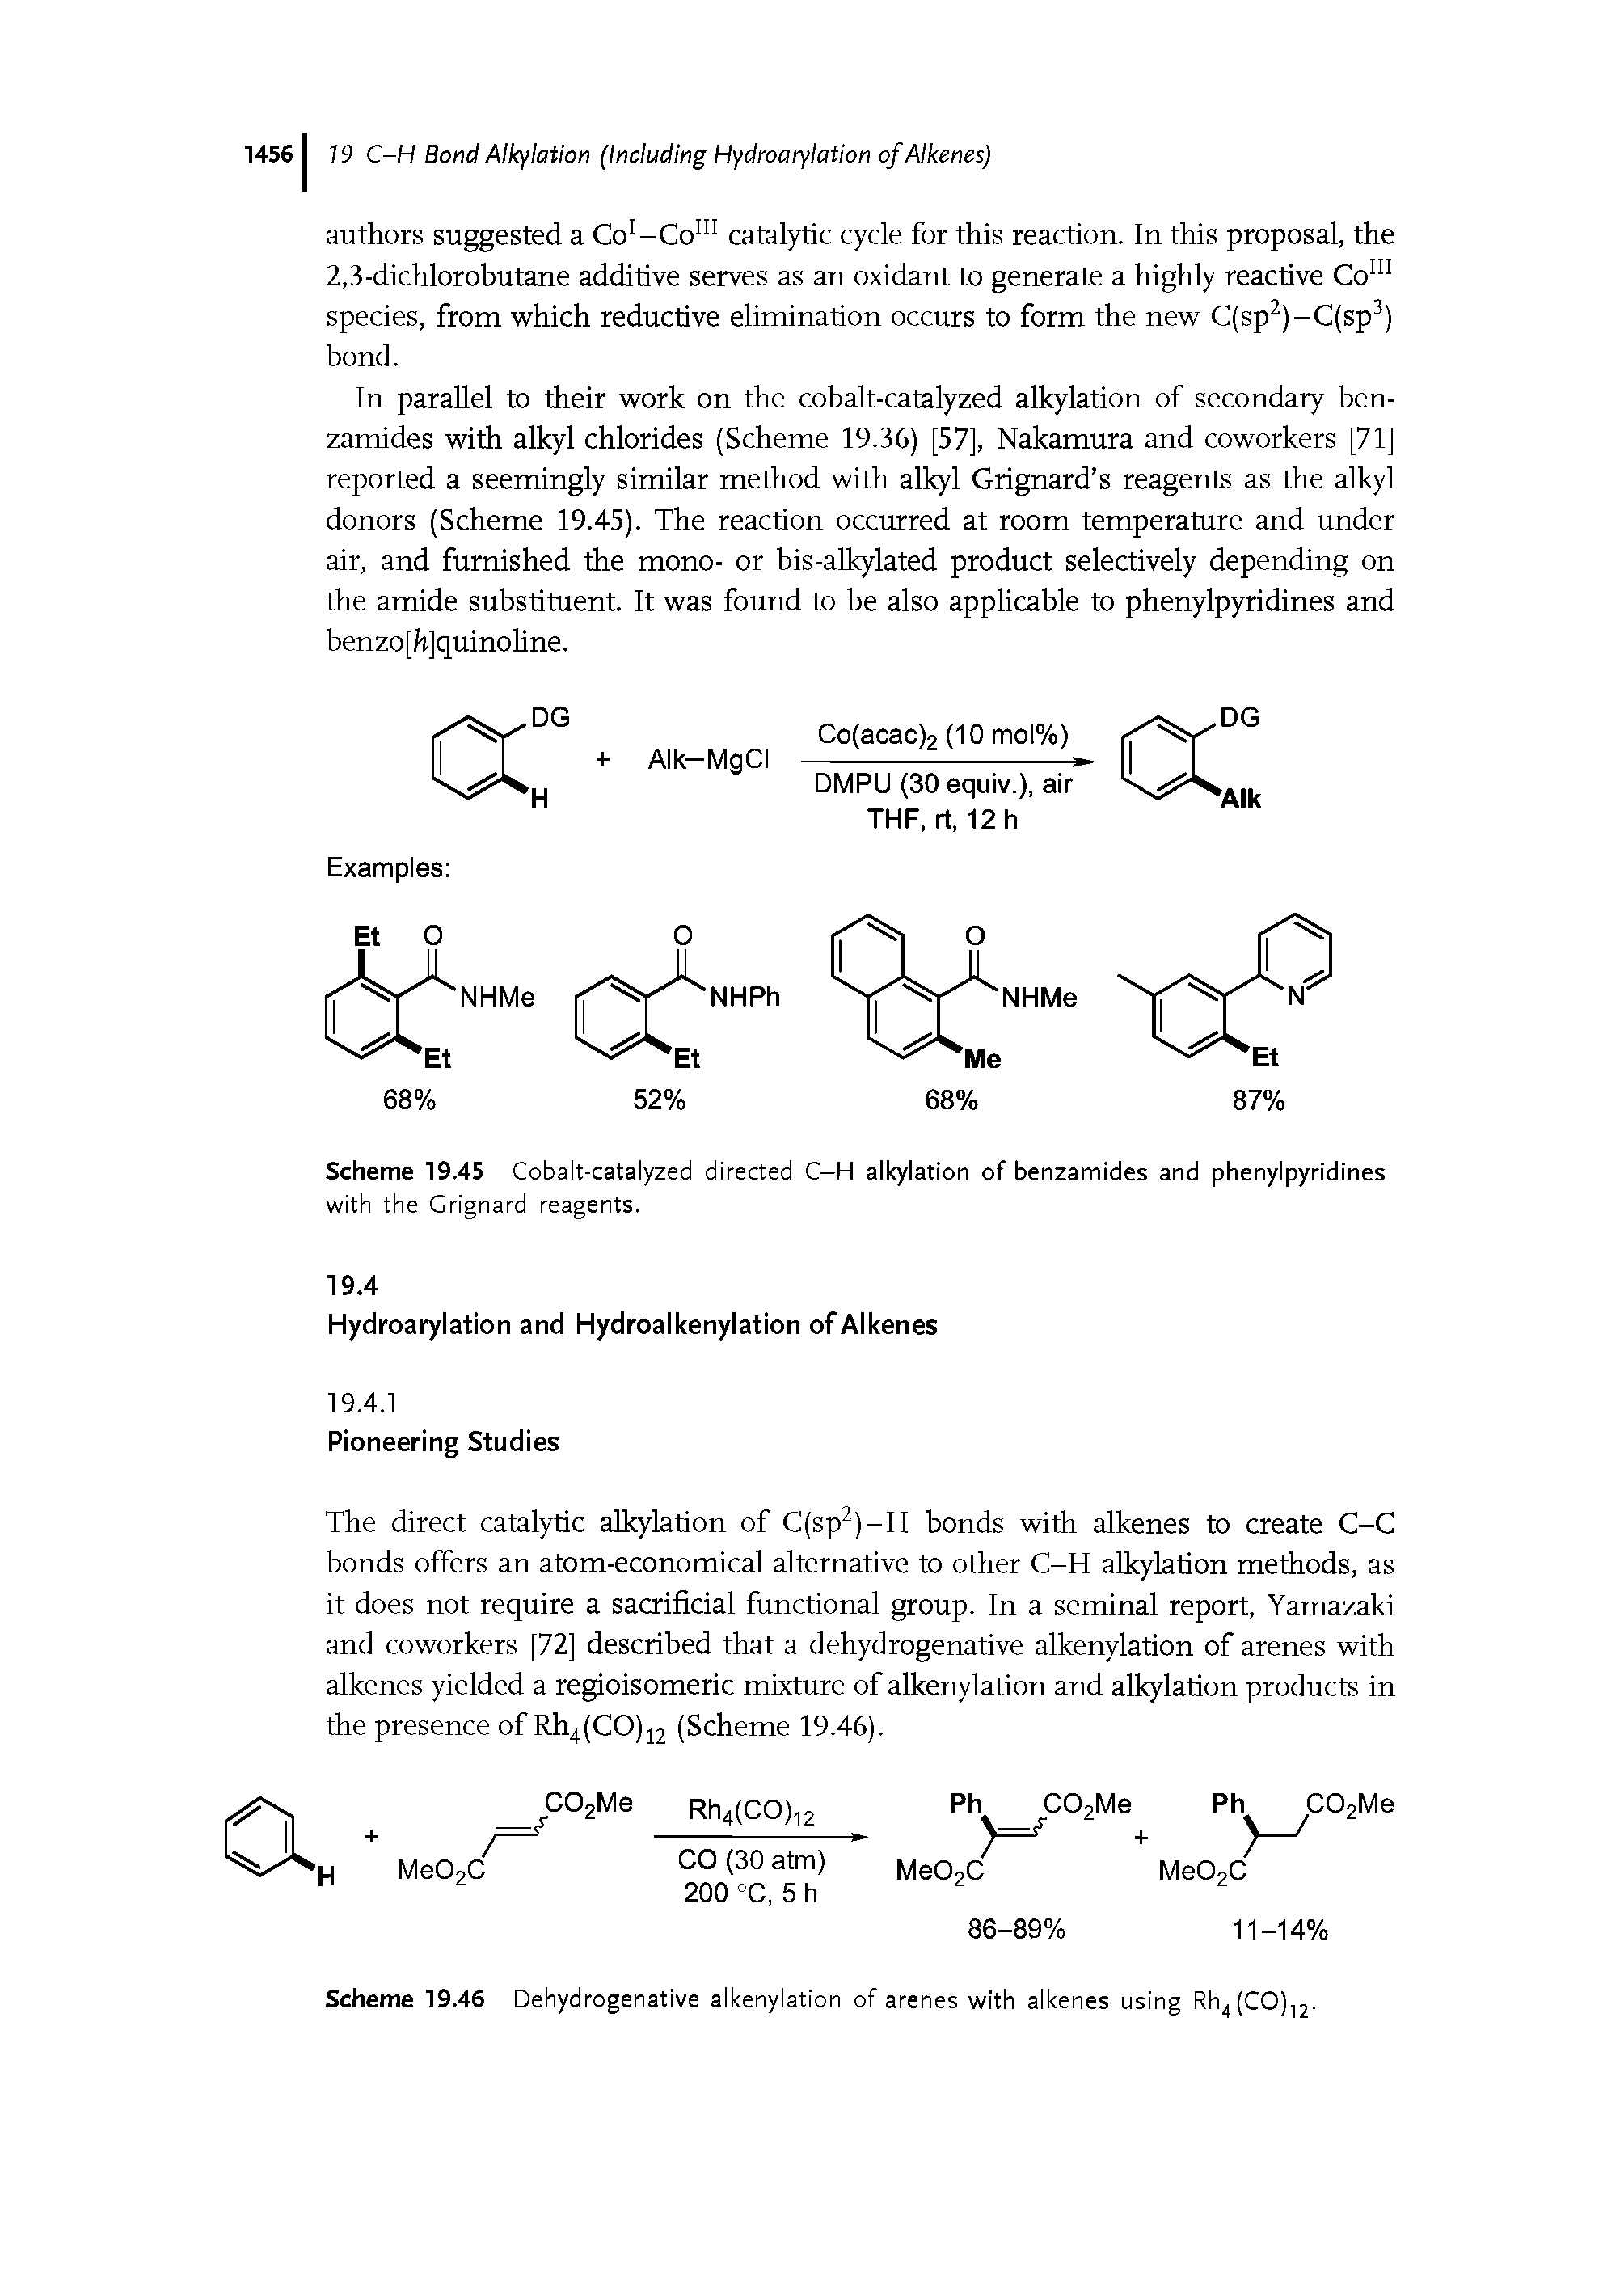 Scheme 19.46 Dehydrogenative alkenylation of arenes with alkenes using Rh4(CO),2.